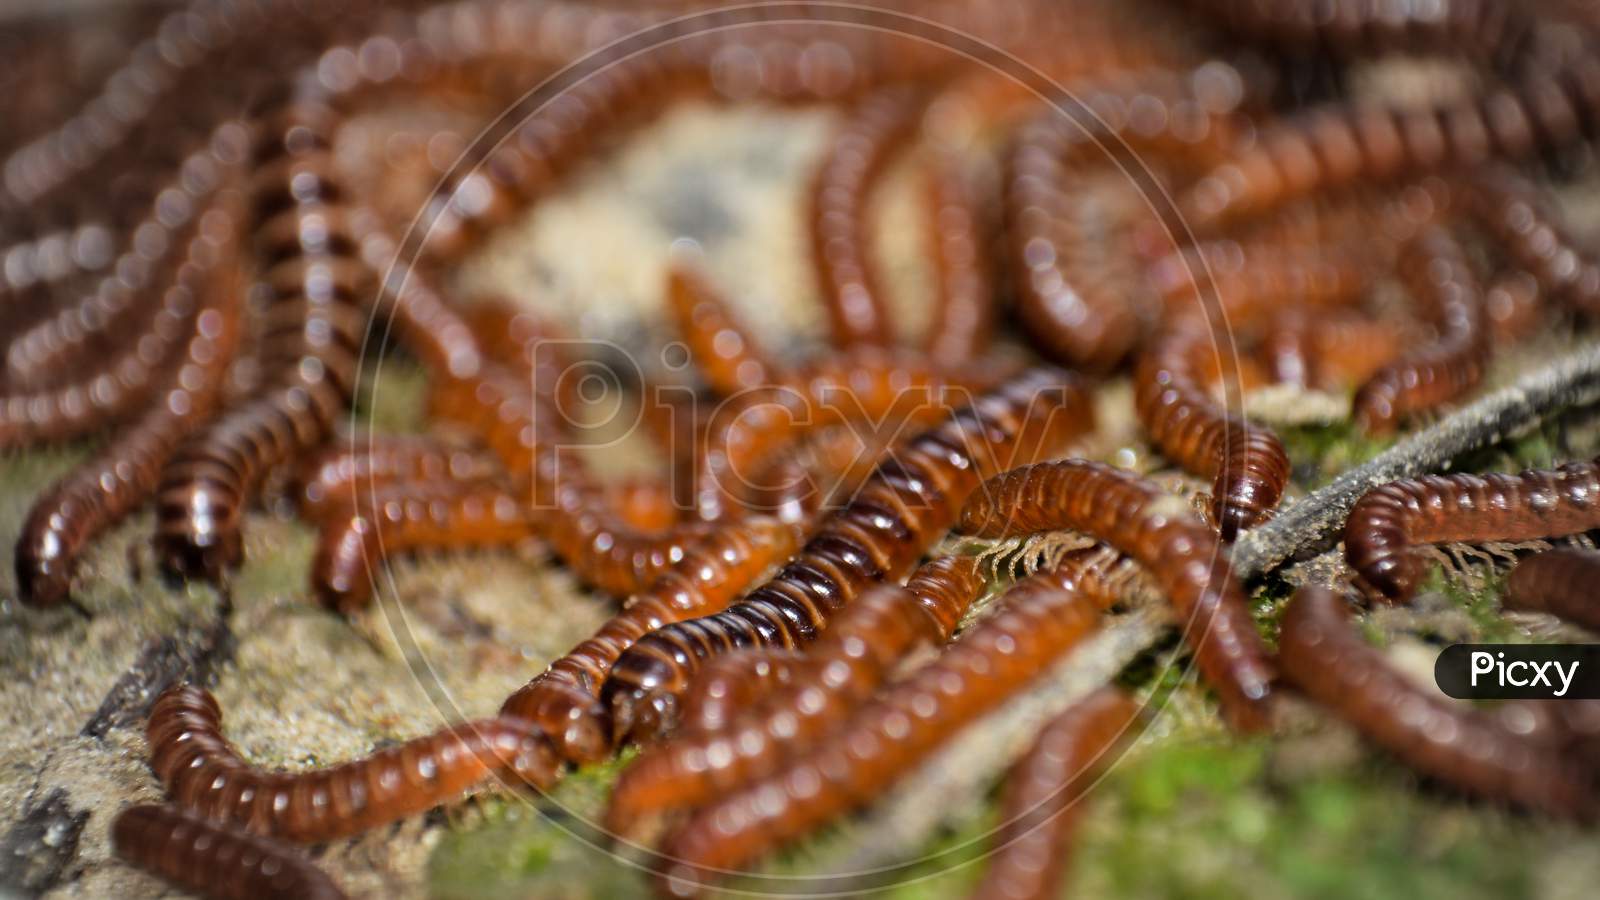 Hundreds of centipede Macro photography